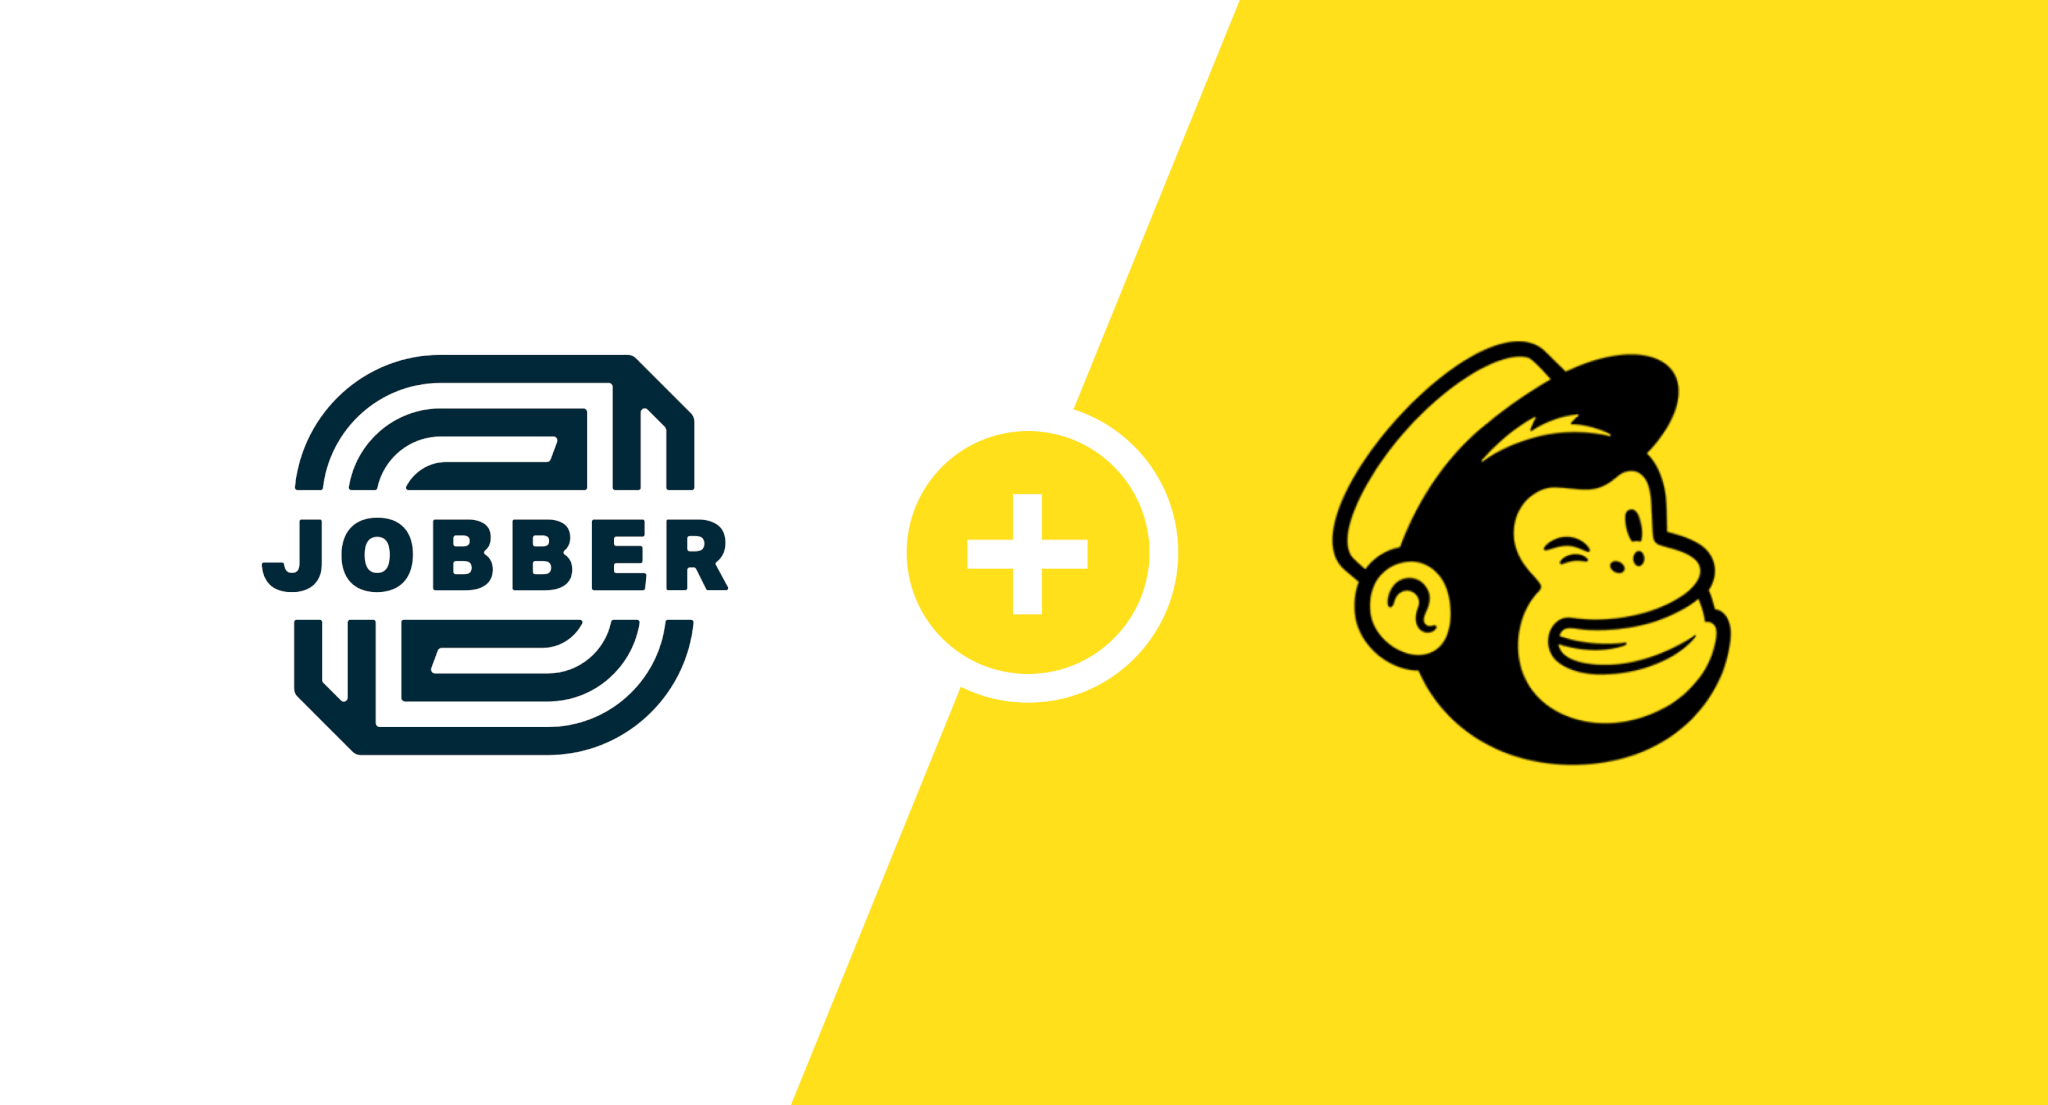 Jobber and Mailchimp logos